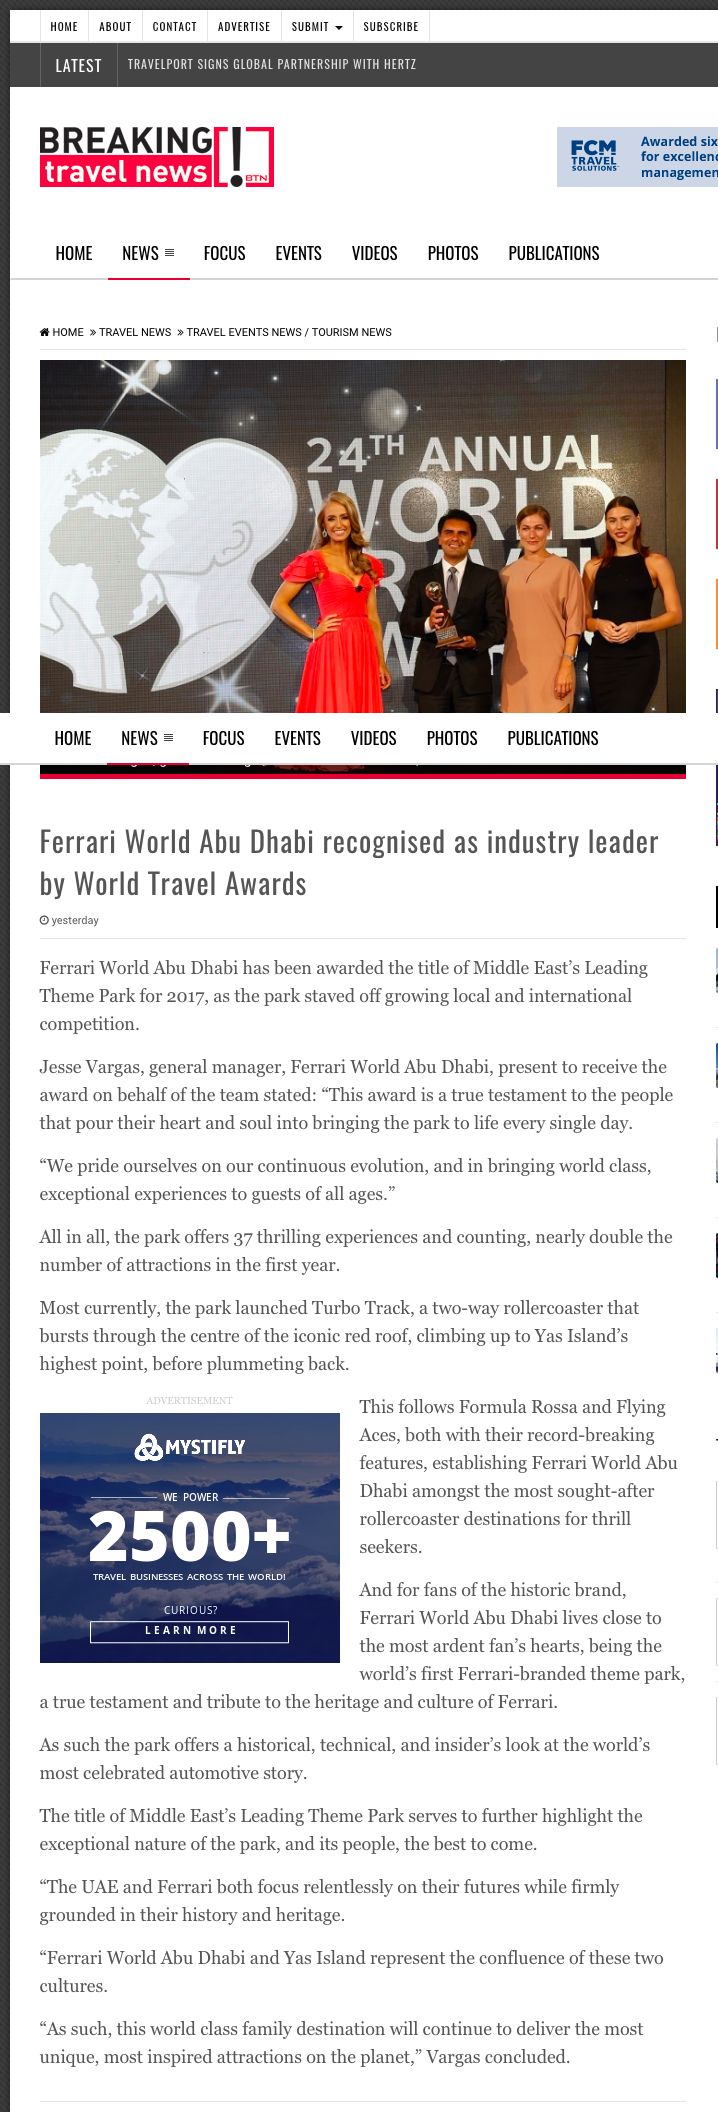 Ferrari World Abu Dhabi recognised as industry leader by World Travel Awards